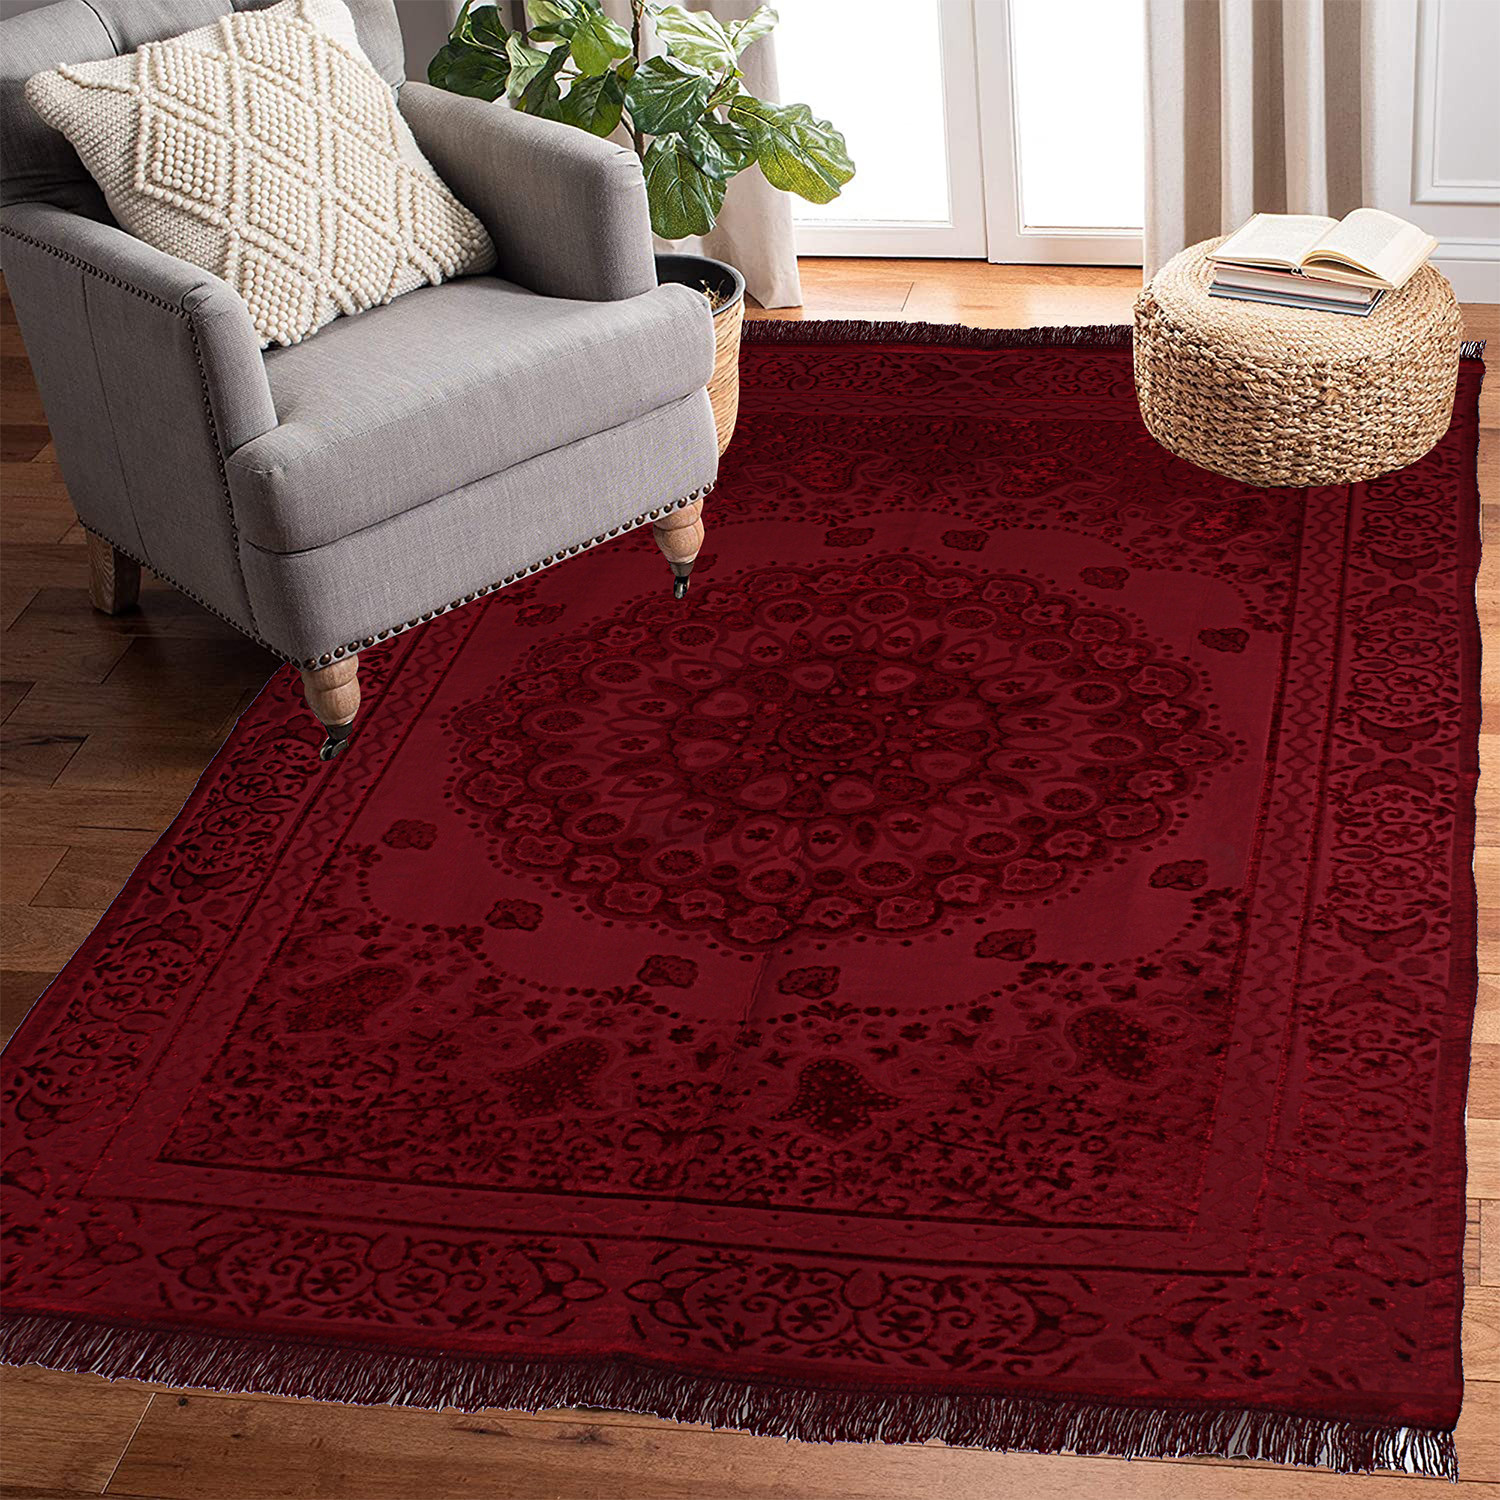 Kuber Industries Carpet|Water Absorption Embossed Floral Pattern Floor Mat|Velvet Sitting Carpet for Hall, Living Room, 5x7 Feet (Maroon)